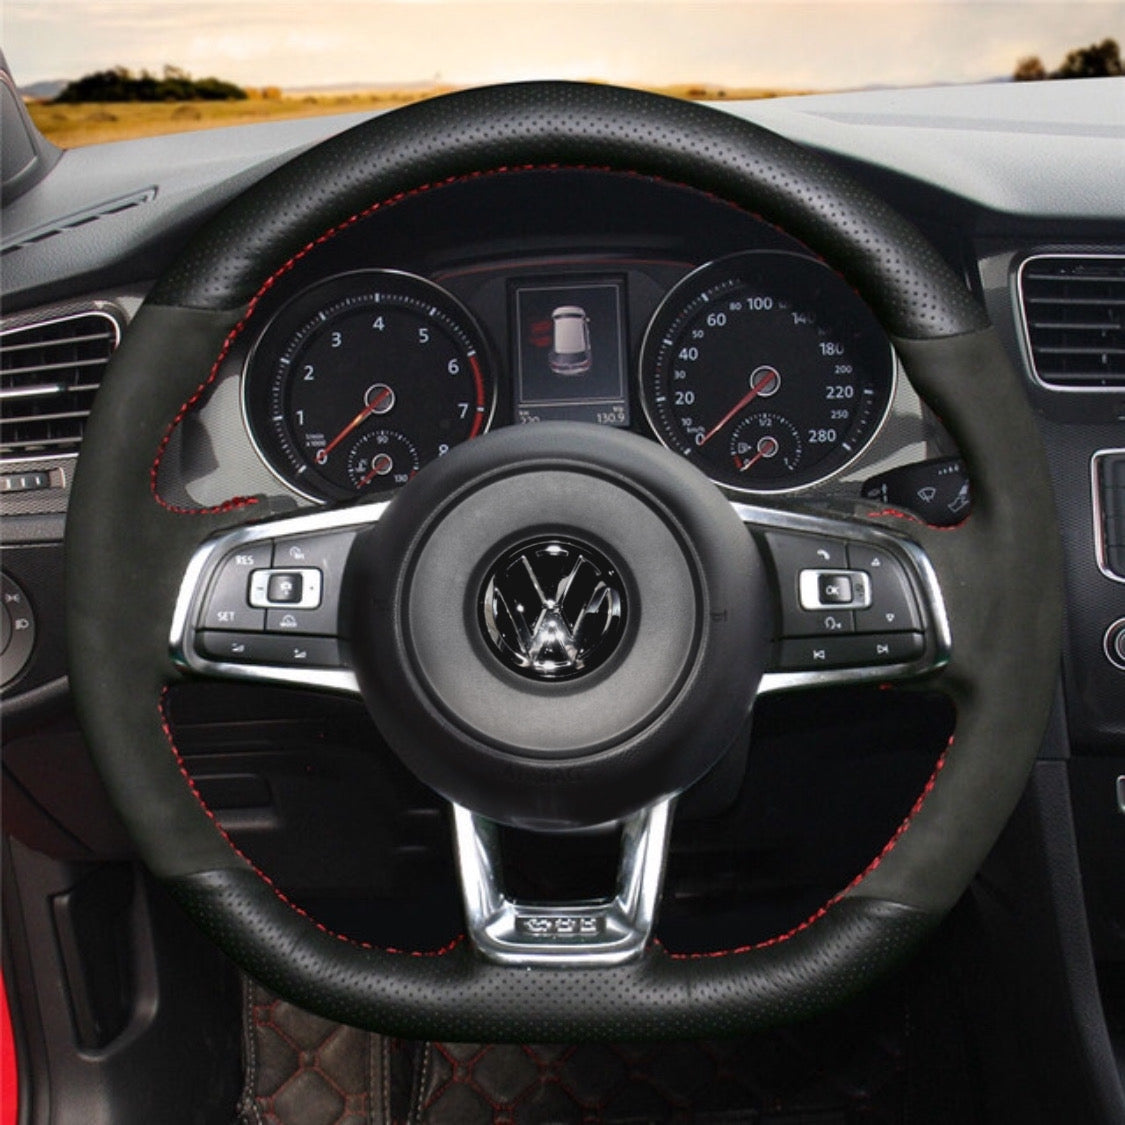 Housse de voiture adaptée à Volkswagen Golf 7 GTI 2014-actuel